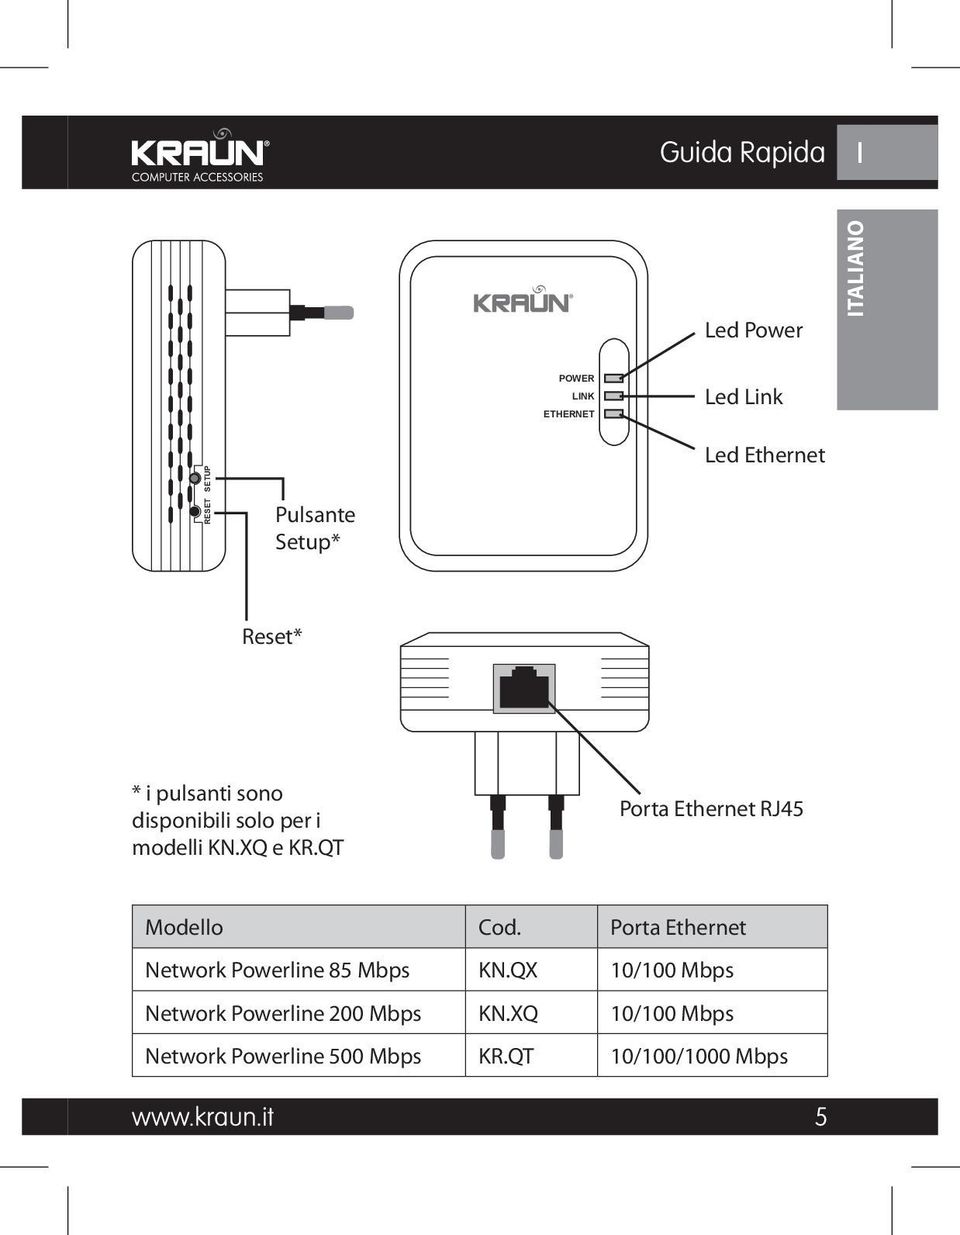 QT Porta Ethernet RJ45 Modello Cod. Porta Ethernet Network Powerline 85 Mbps KN.